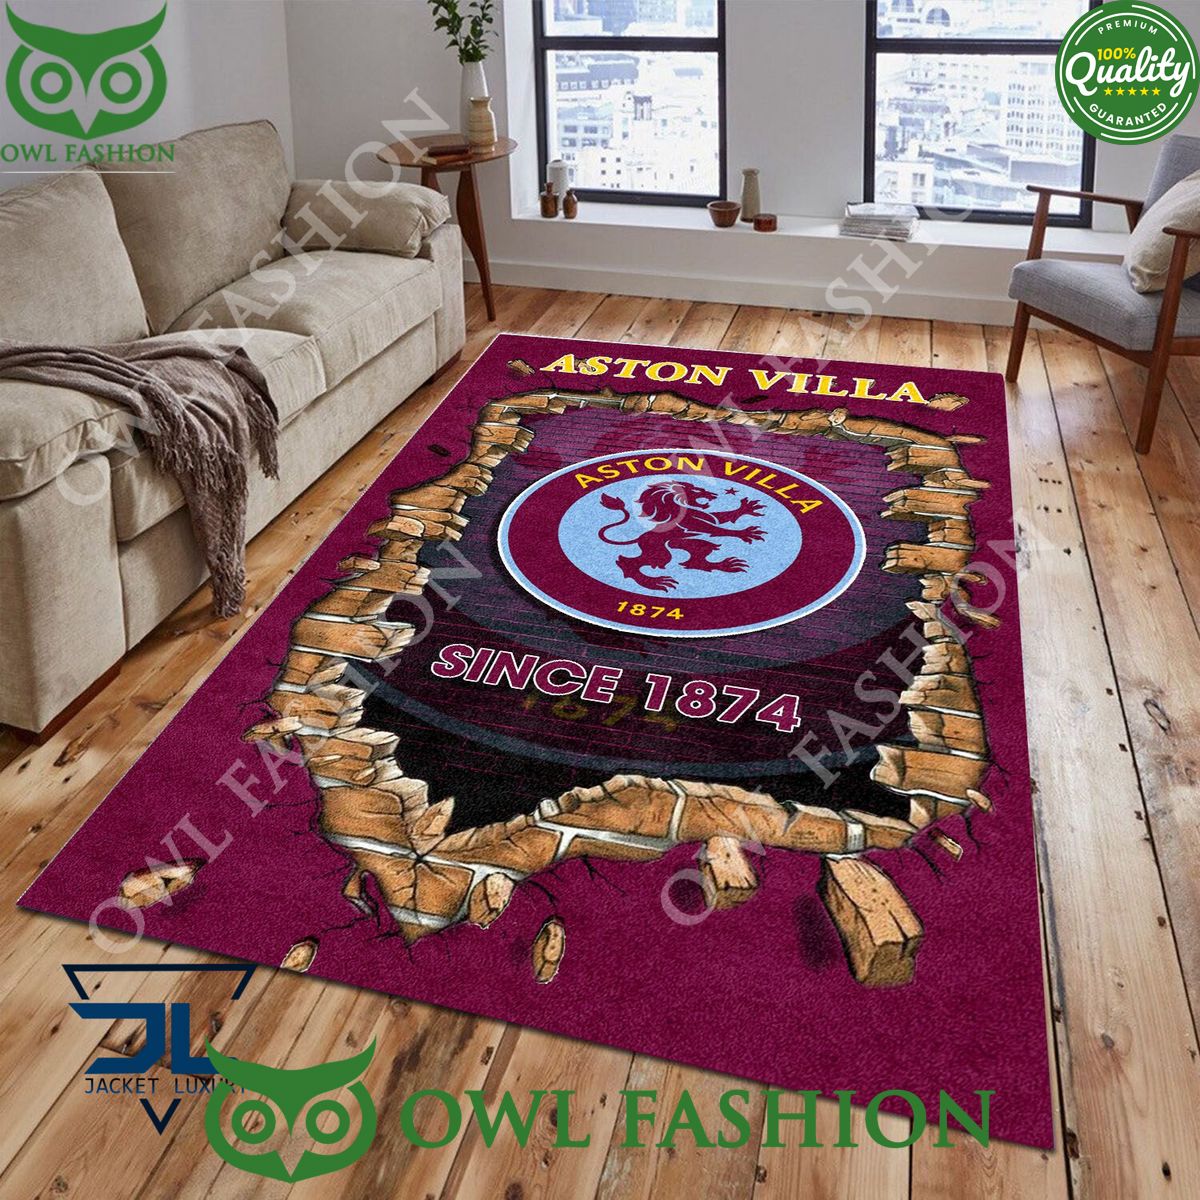 aston villa f c 1868 premier league living room carpet 1 mMCAD.jpg